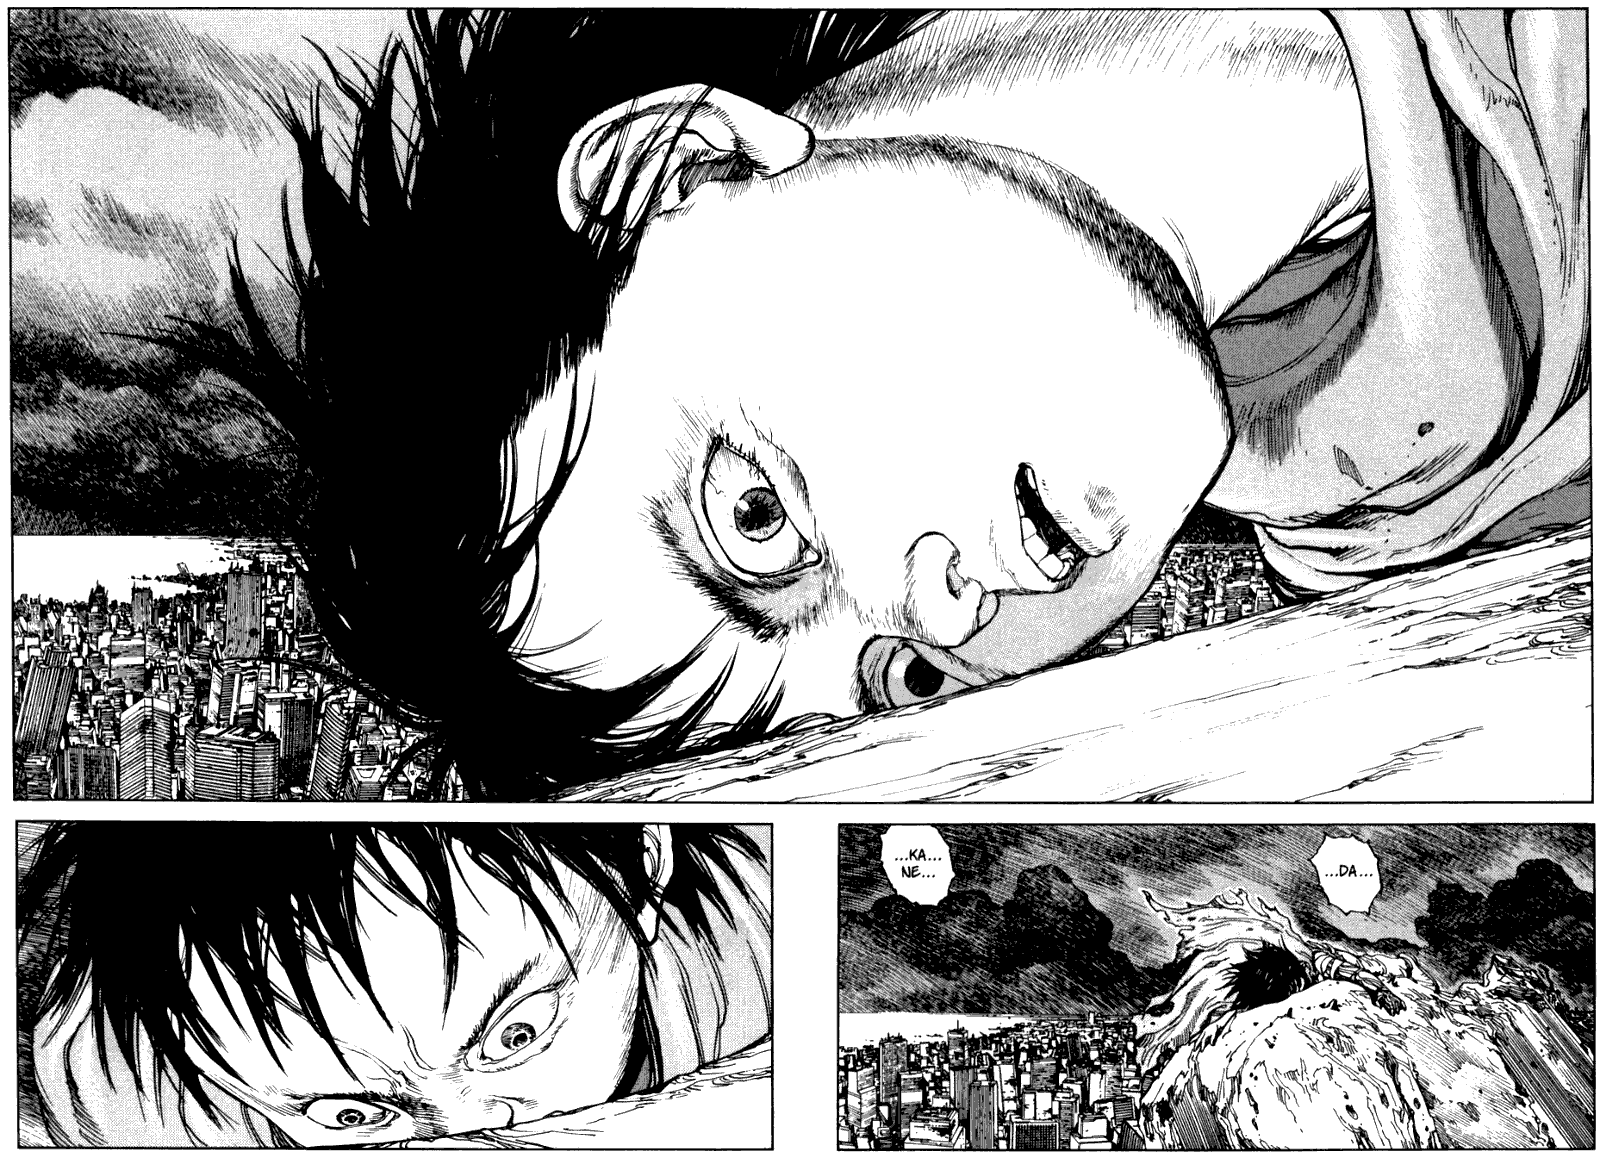 read online page 277 of akira volume 4 manga graphic novel